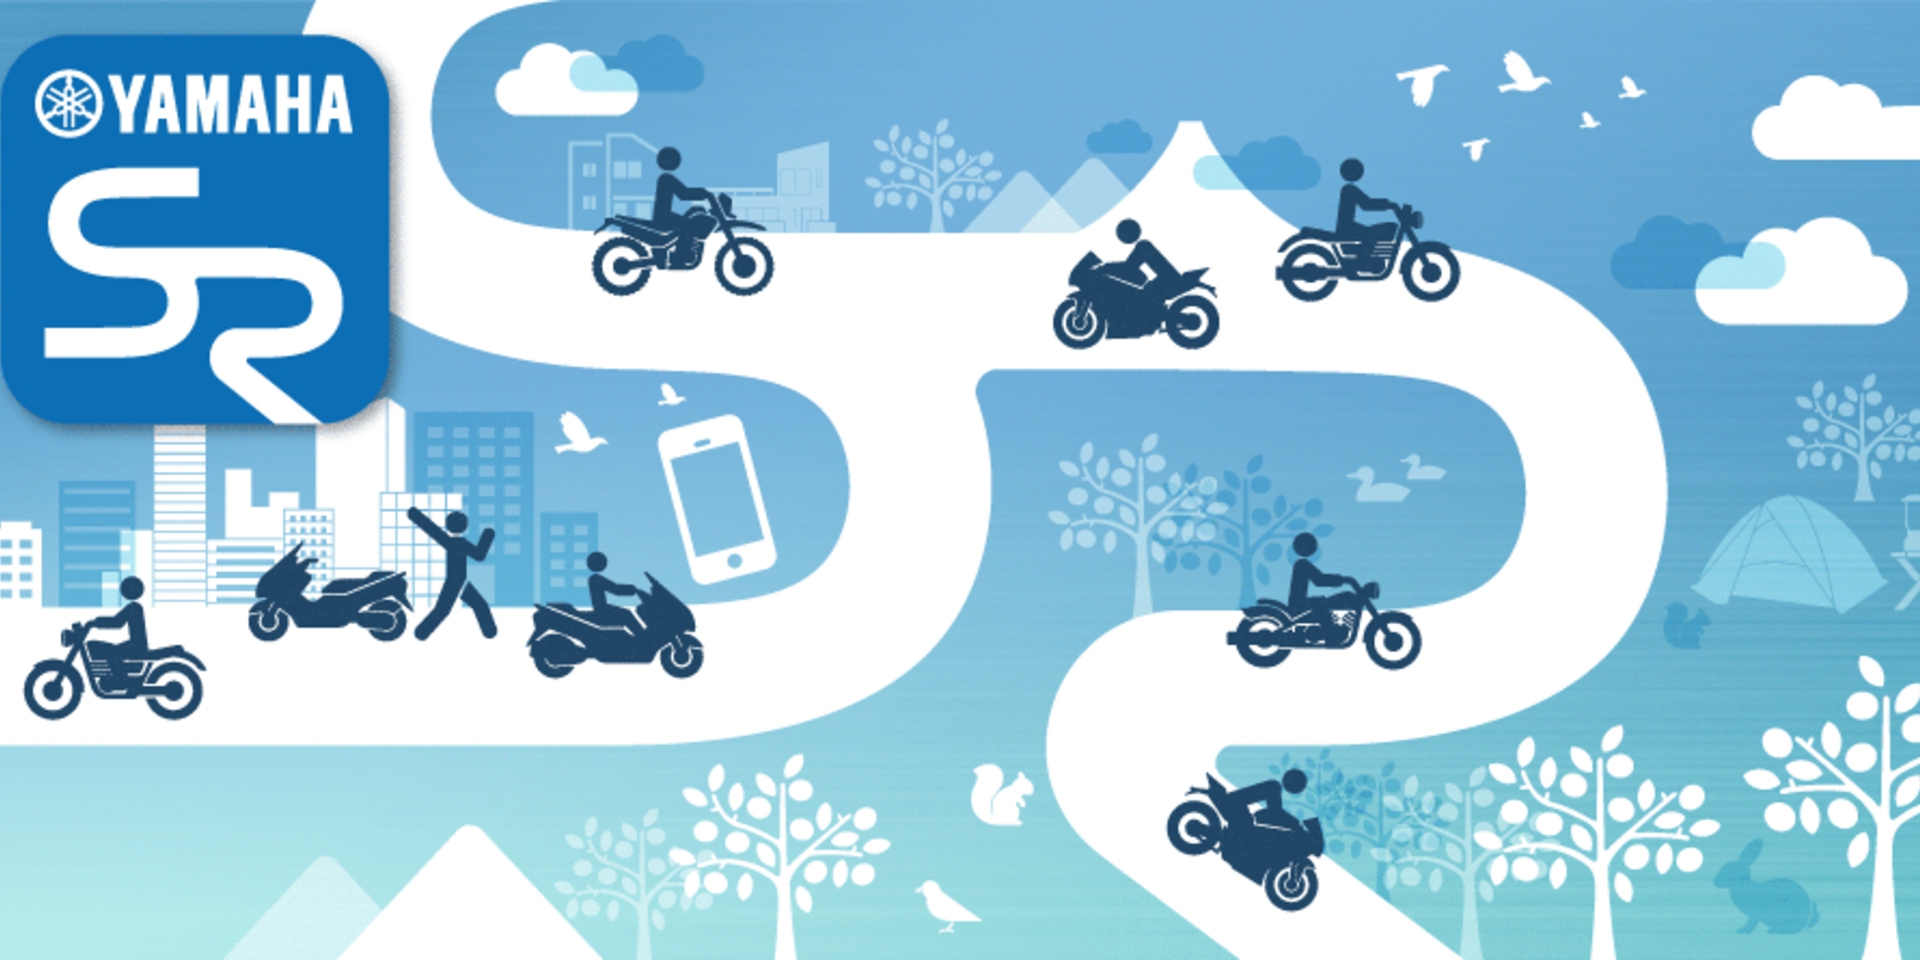 用App增加騎乘樂趣。Yamaha發表Smart Riding App